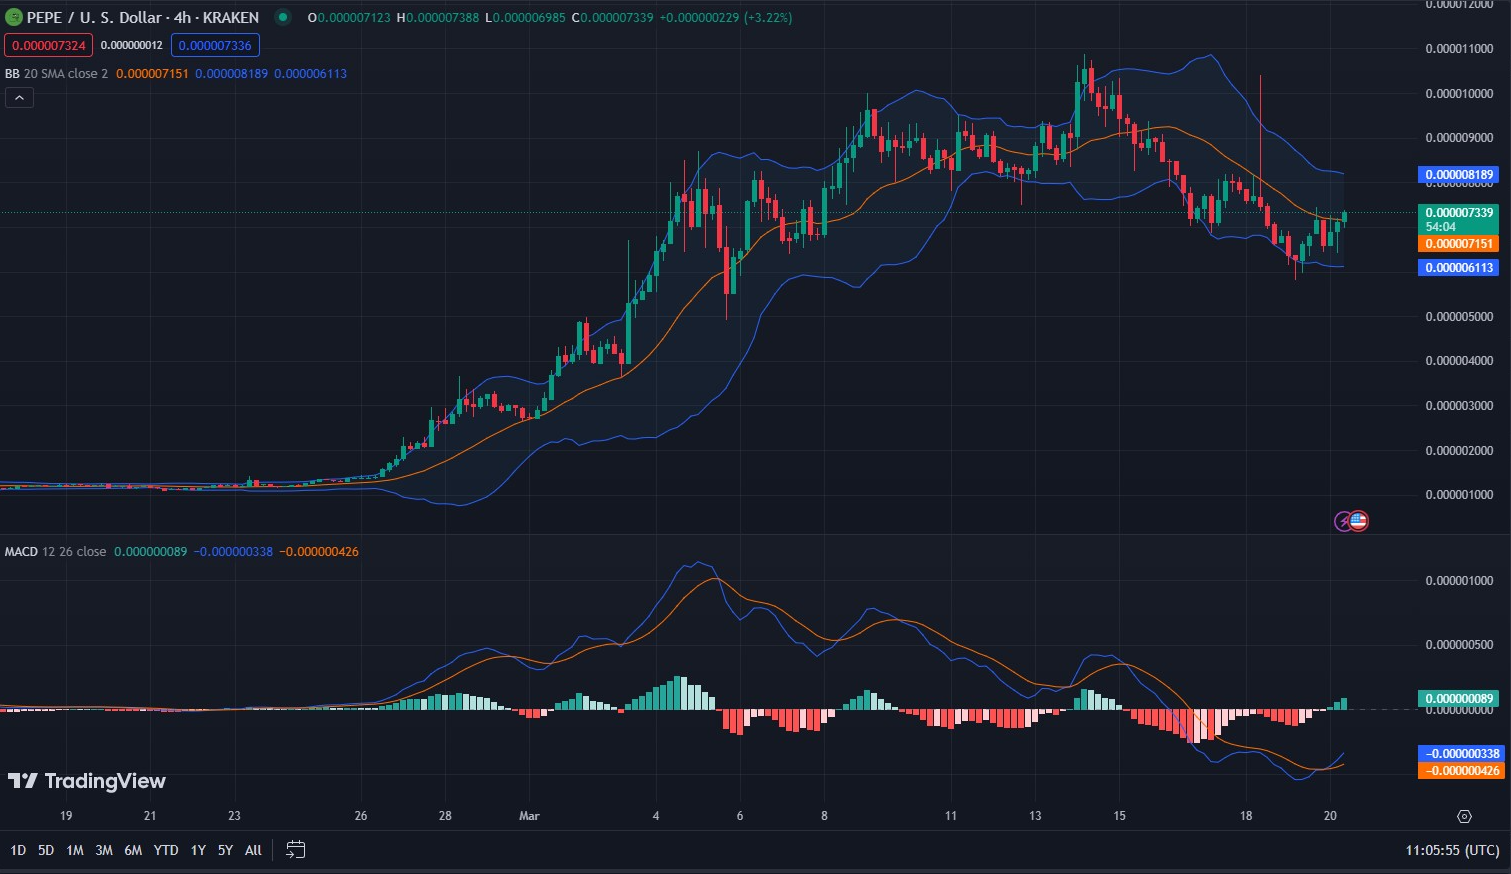 PEPE/USD 4-hour price chart (source: TradingView)